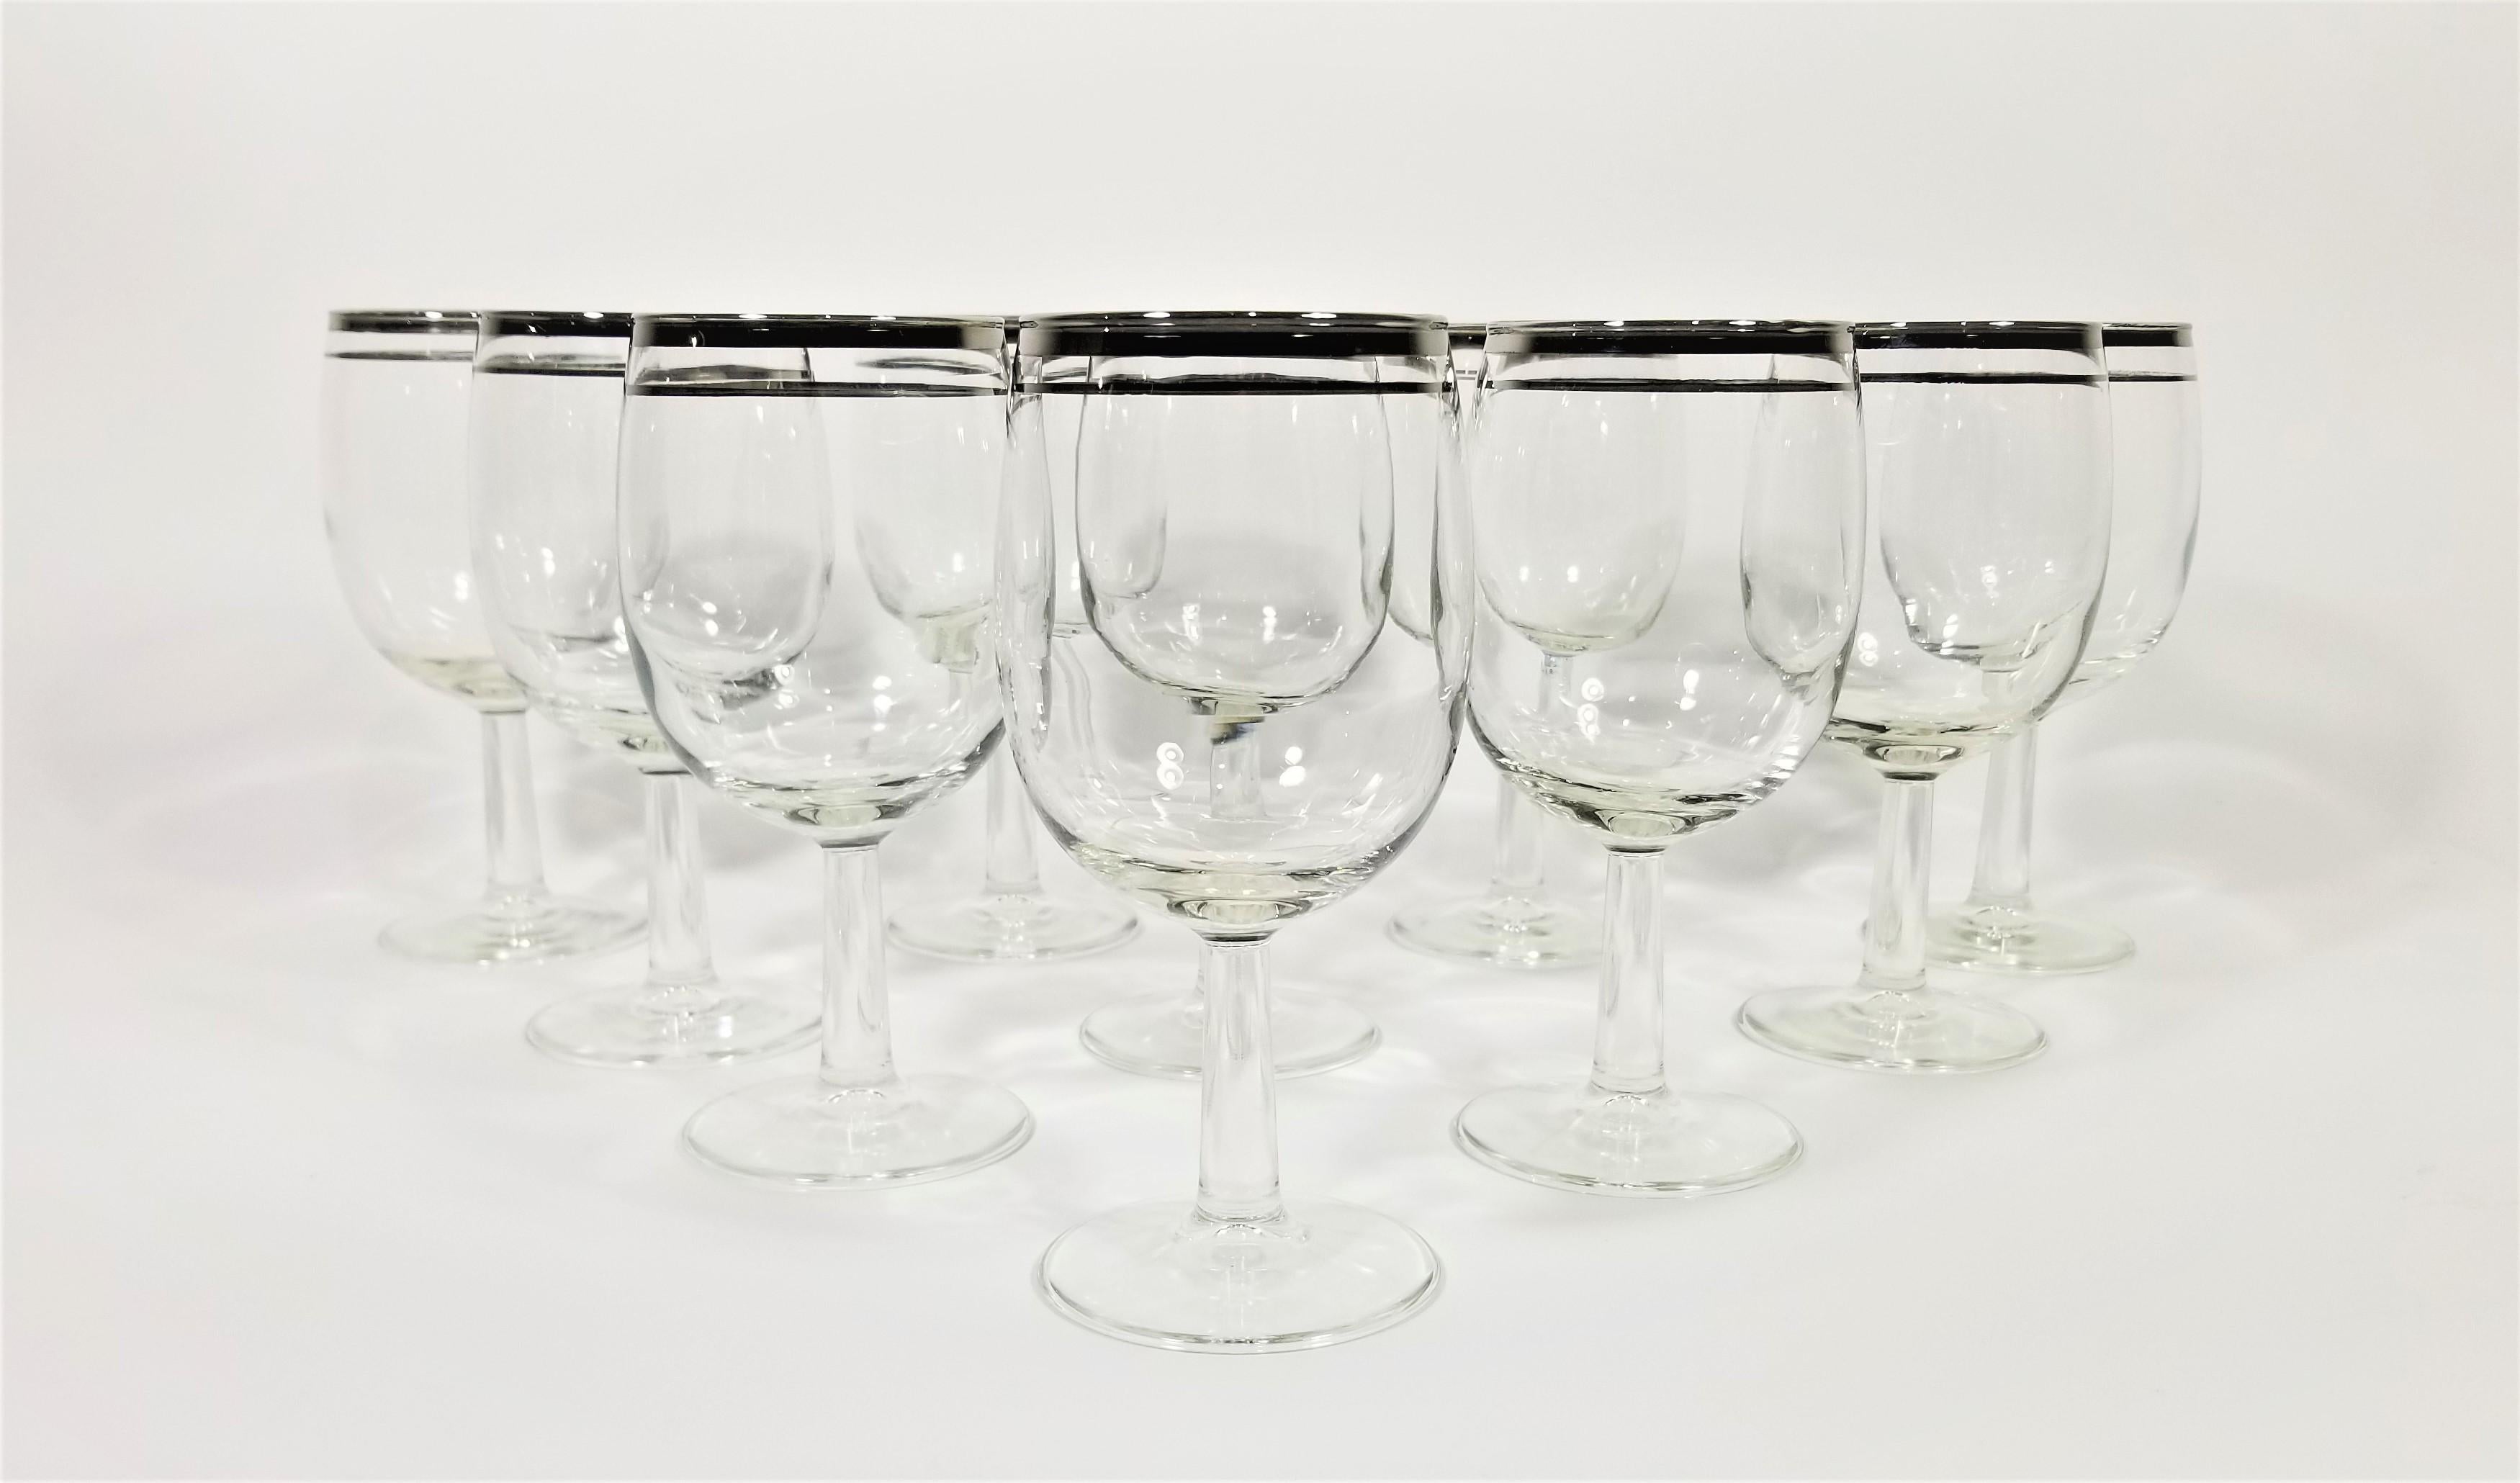 Silver Rimmed Stemware Wine Glasses Midcentury Set of 10 For Sale 2